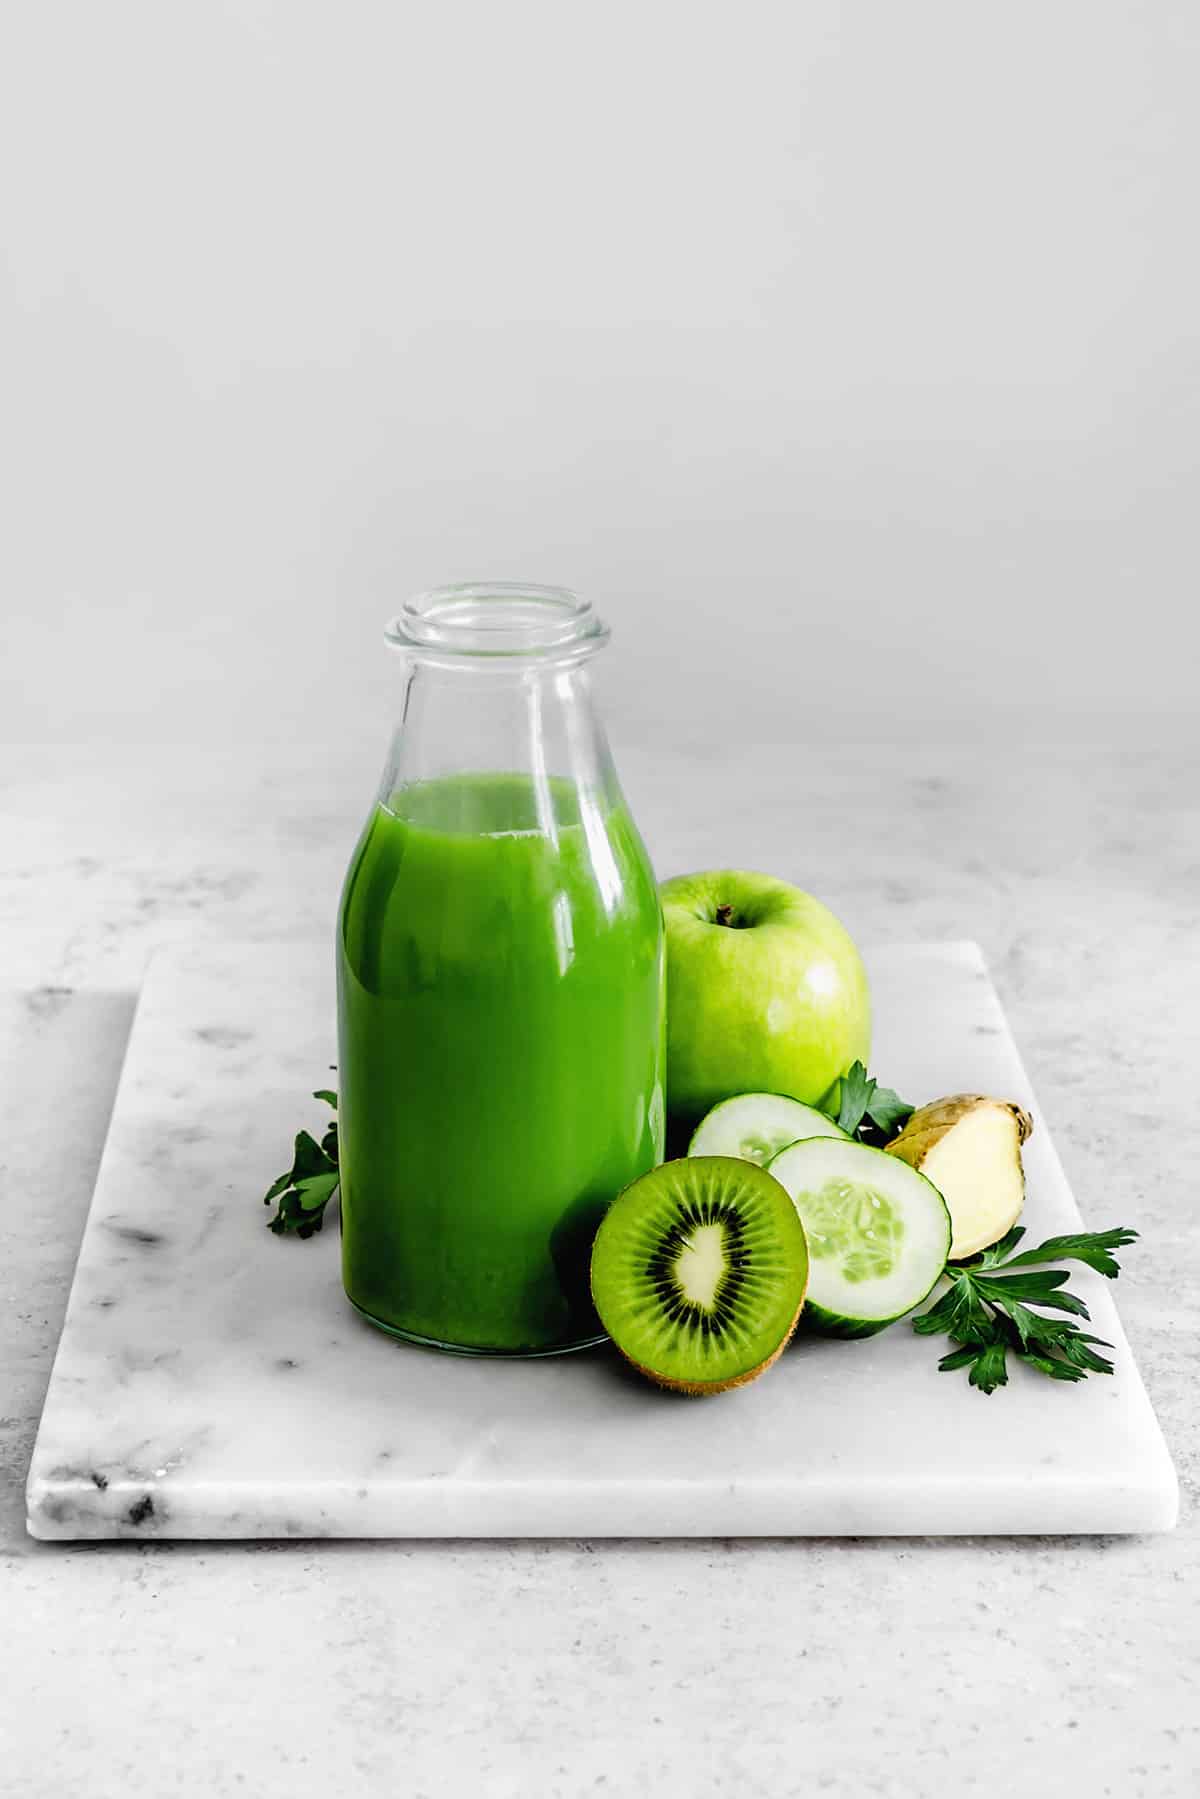 Green detox juice cleanse